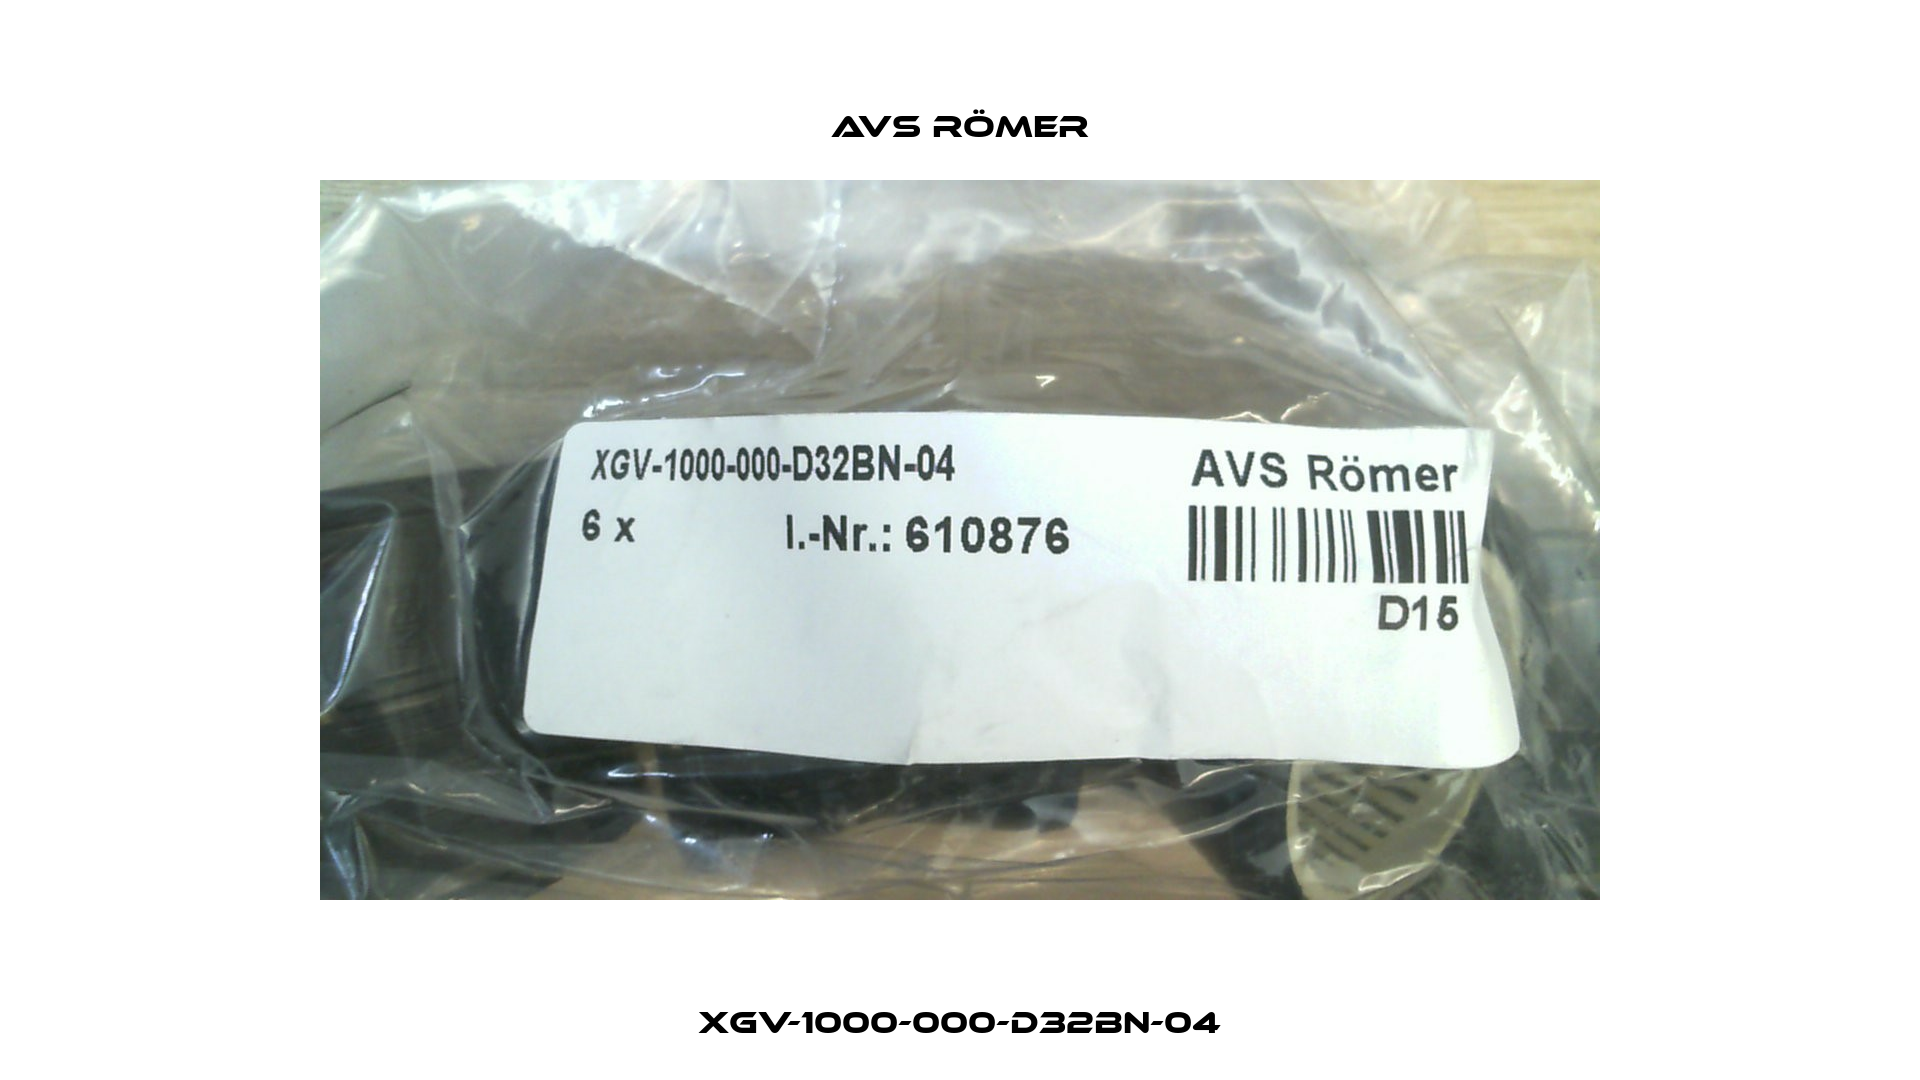 XGV-1000-000-D32BN-04 Avs Römer